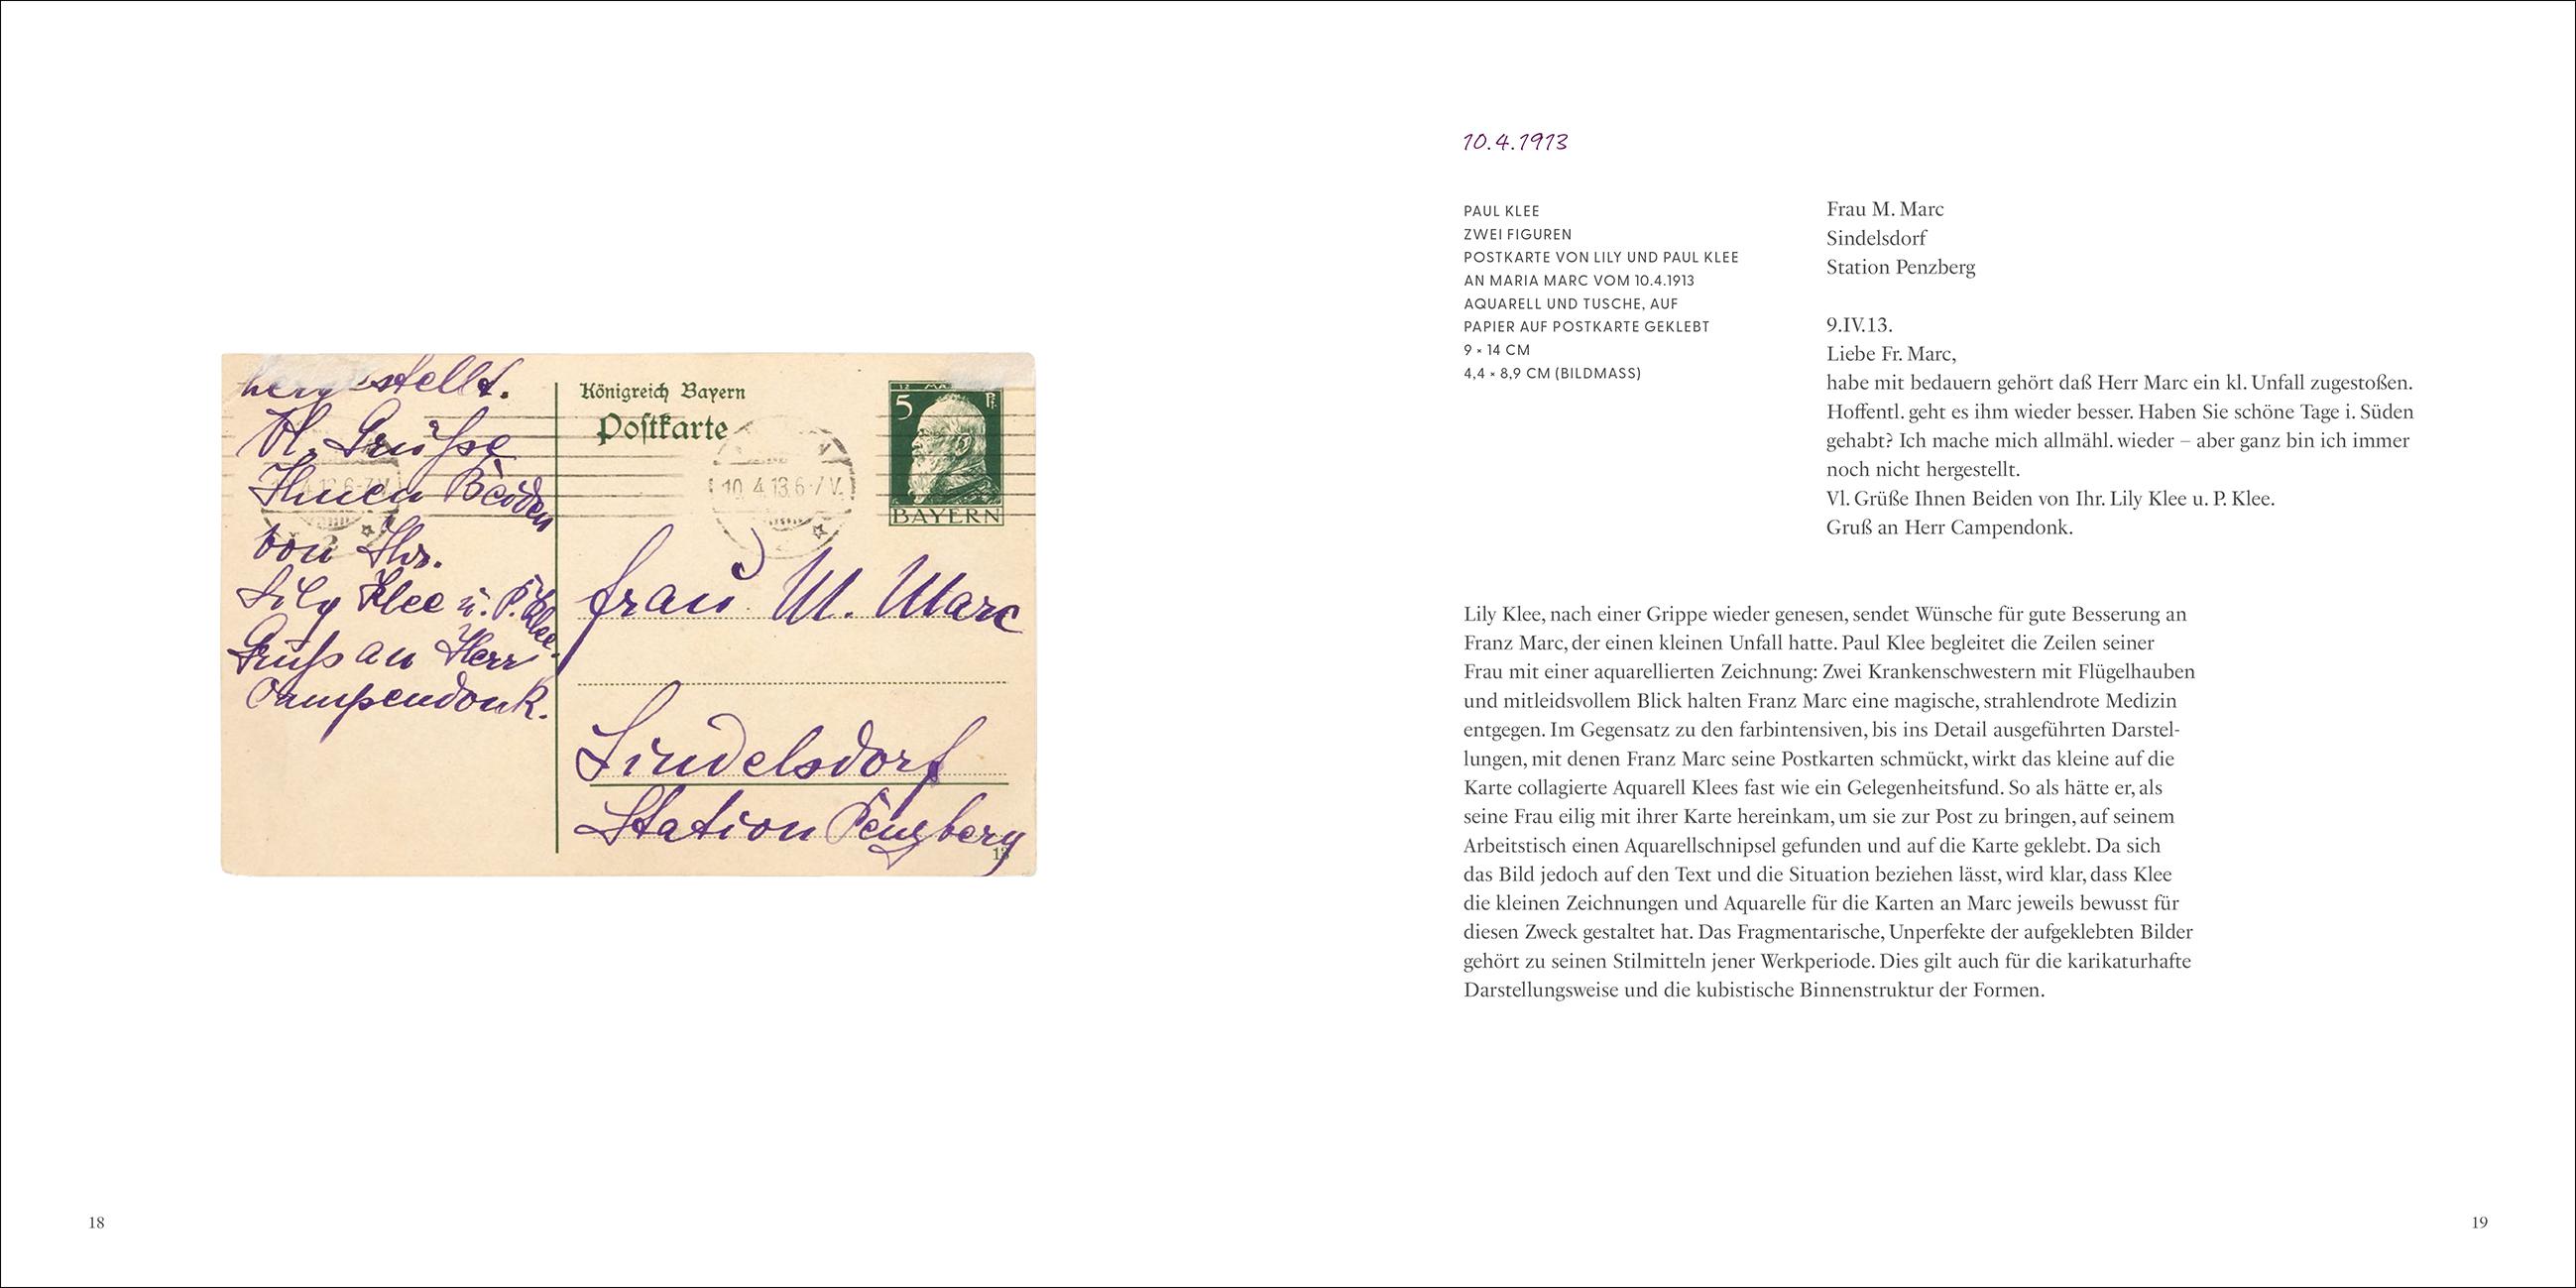 Franz Marc: Bunte Grüße an Paul Klee